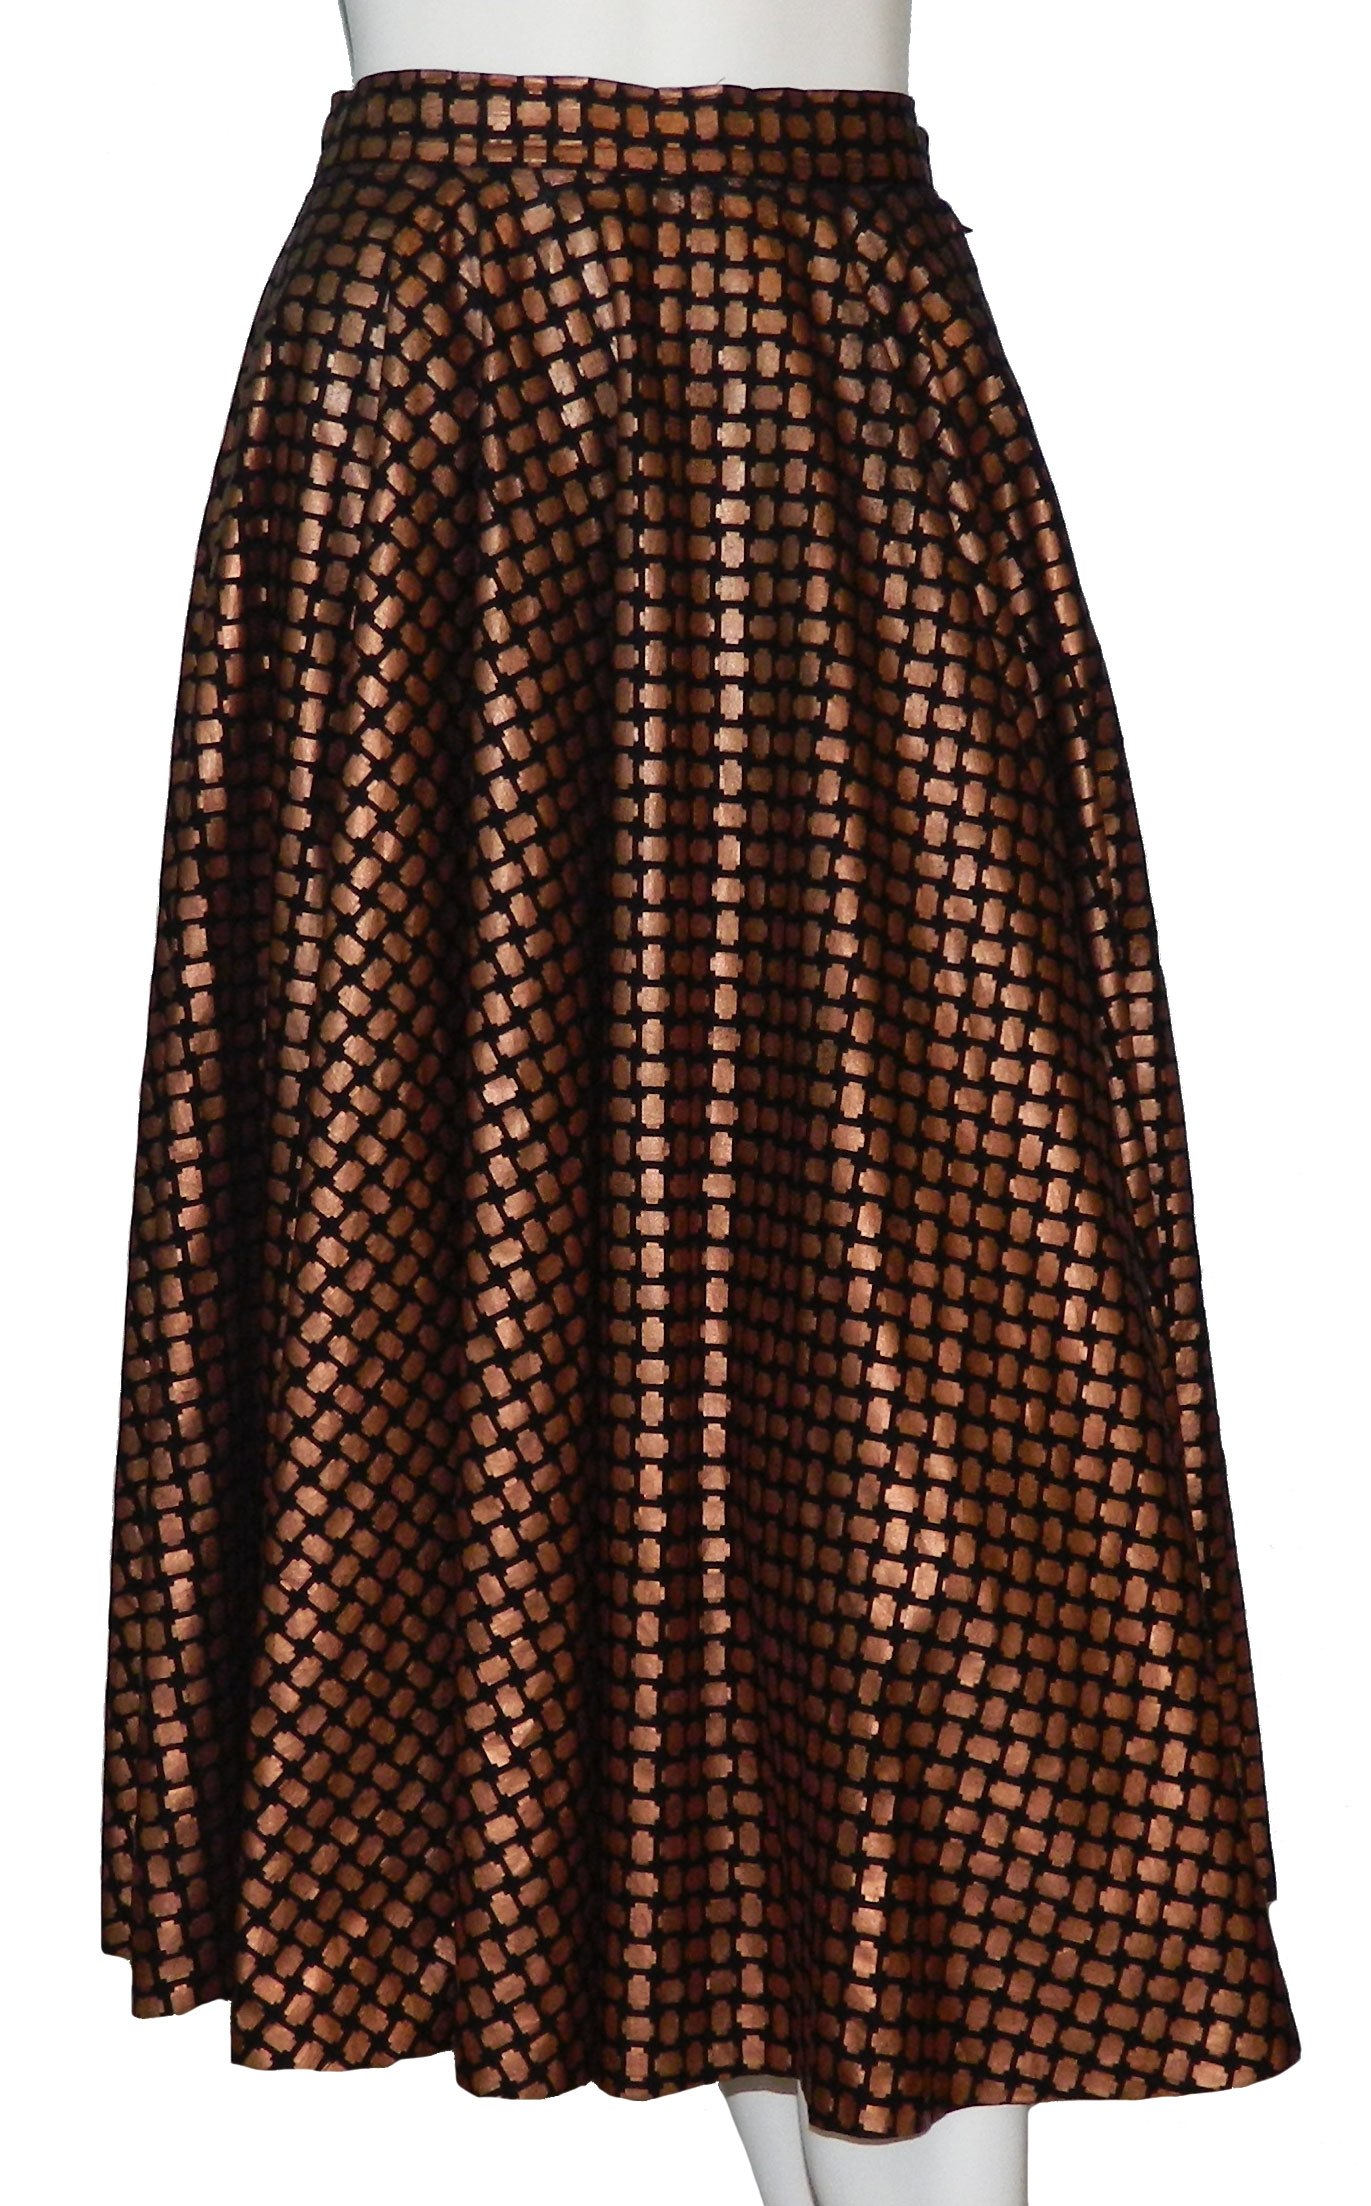 1950s copper circle skirt